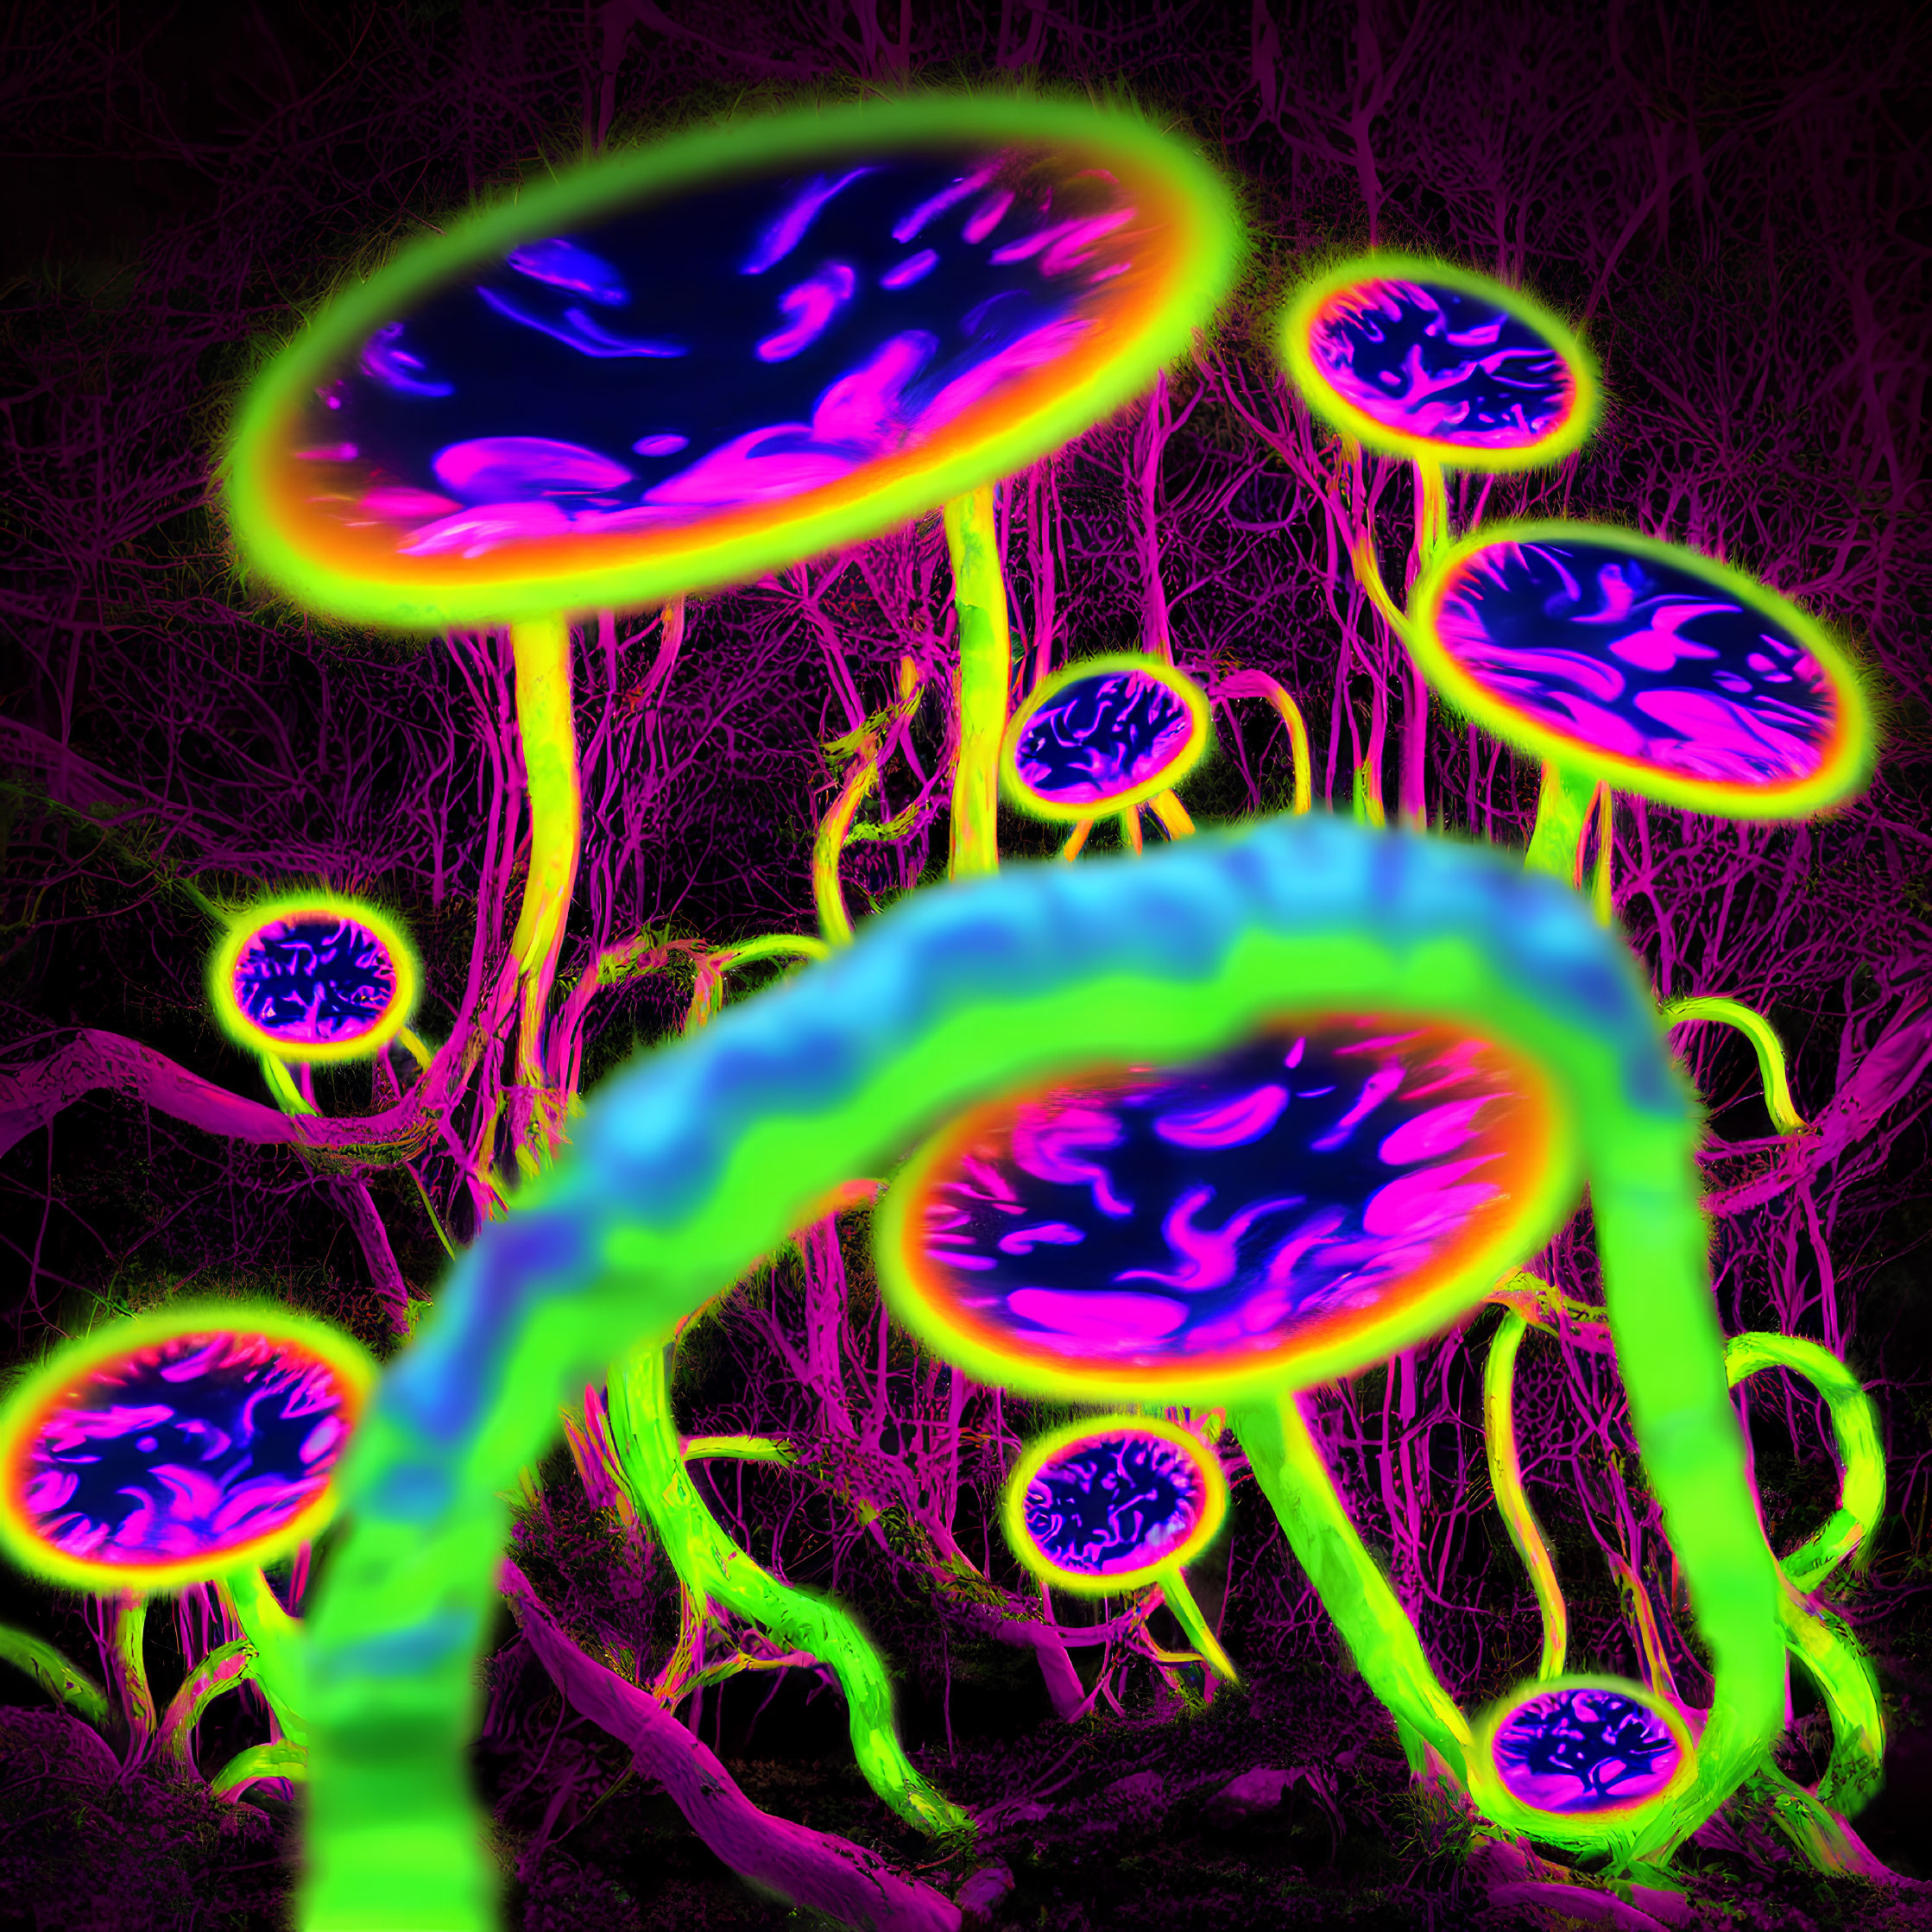 Neon-colored mushroom-like forms on dark background